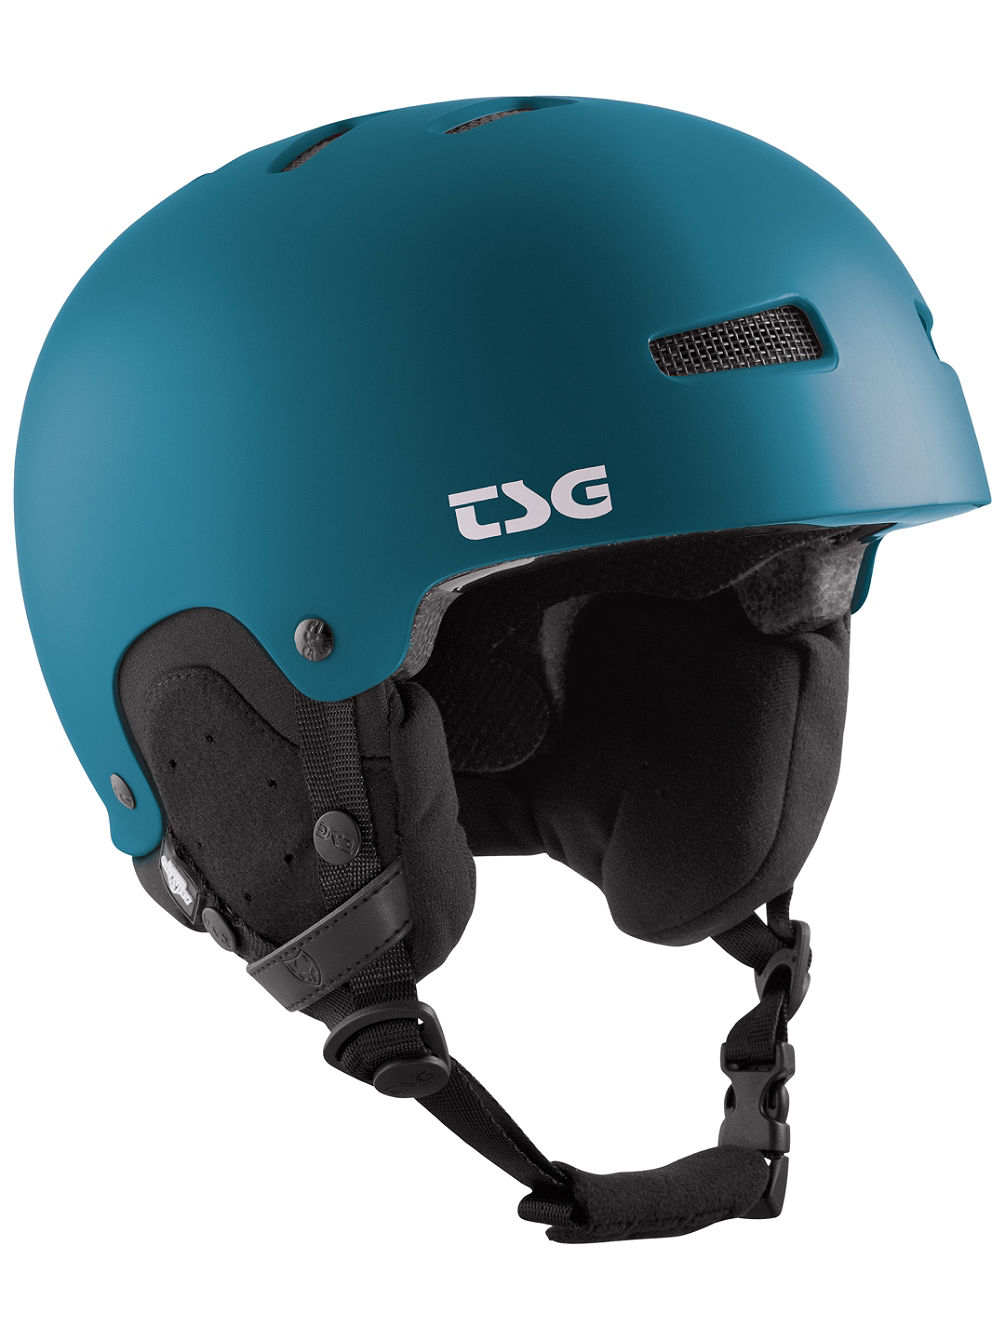 Gravity Solid Color Helmet